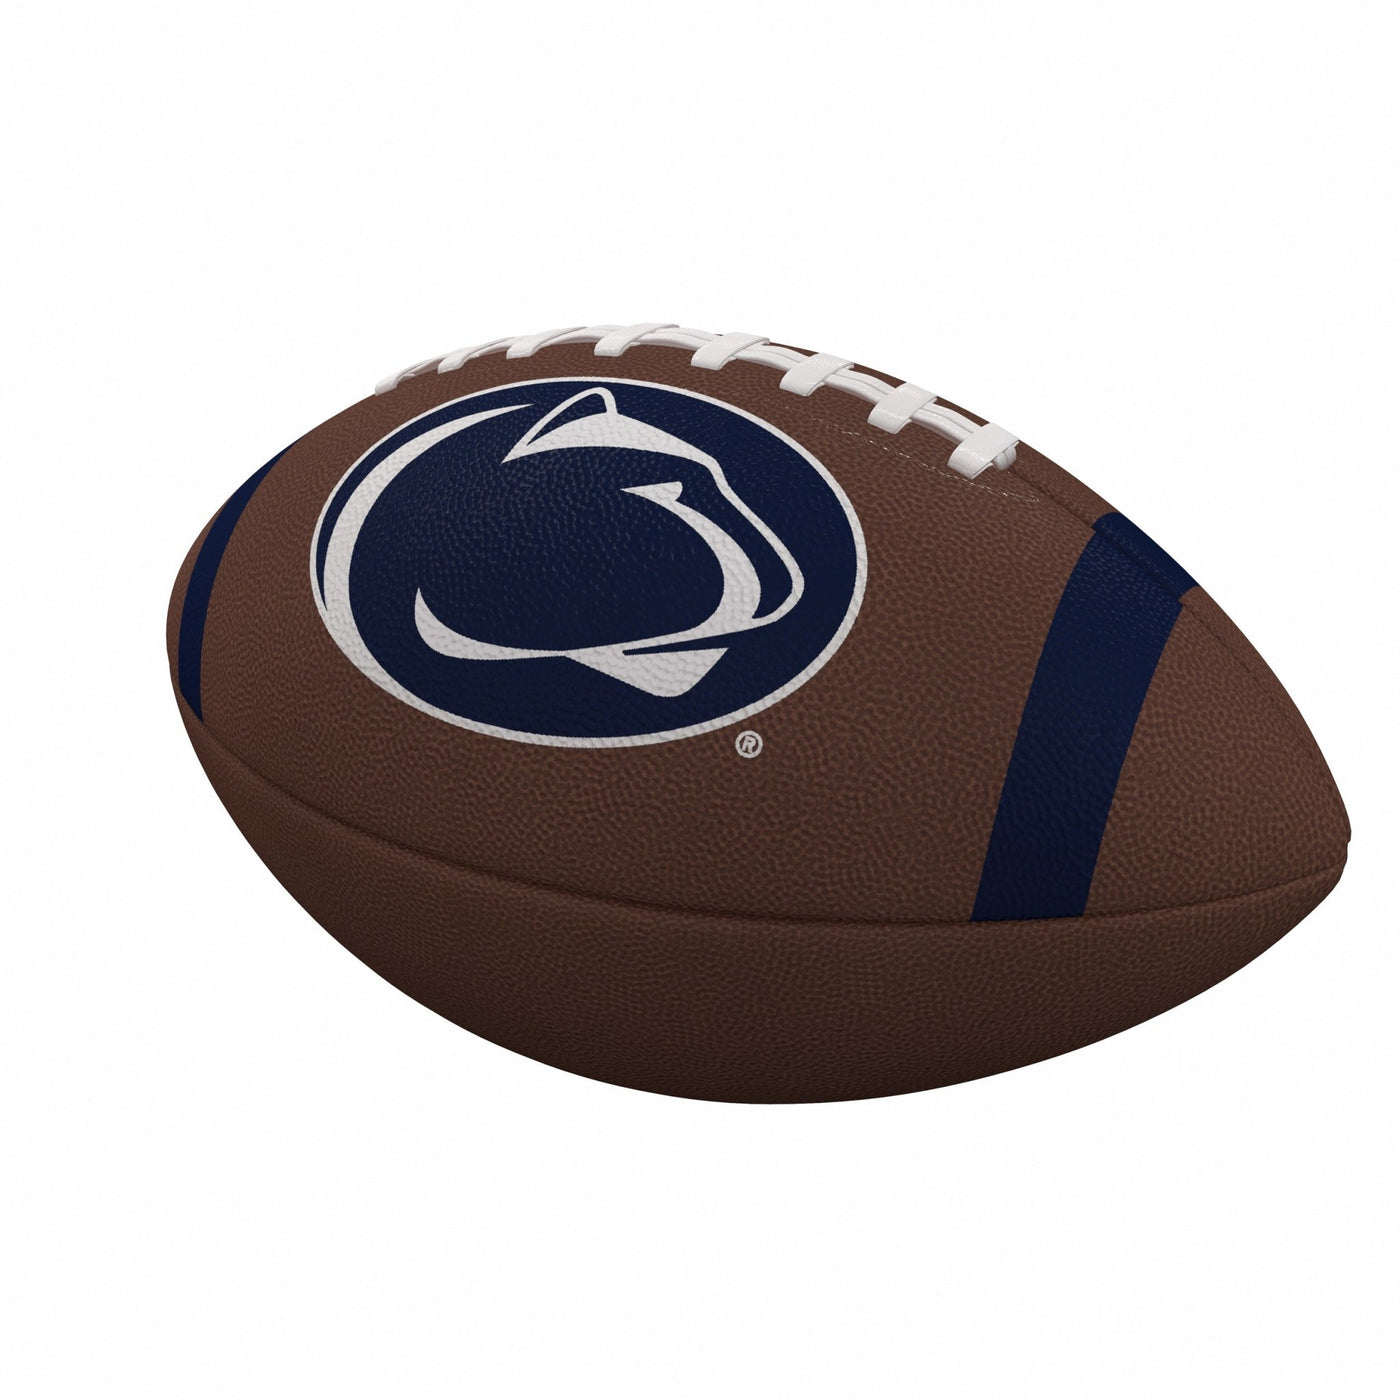 Penn State Team Stripe Official-Size Composite Football - Logo Brands